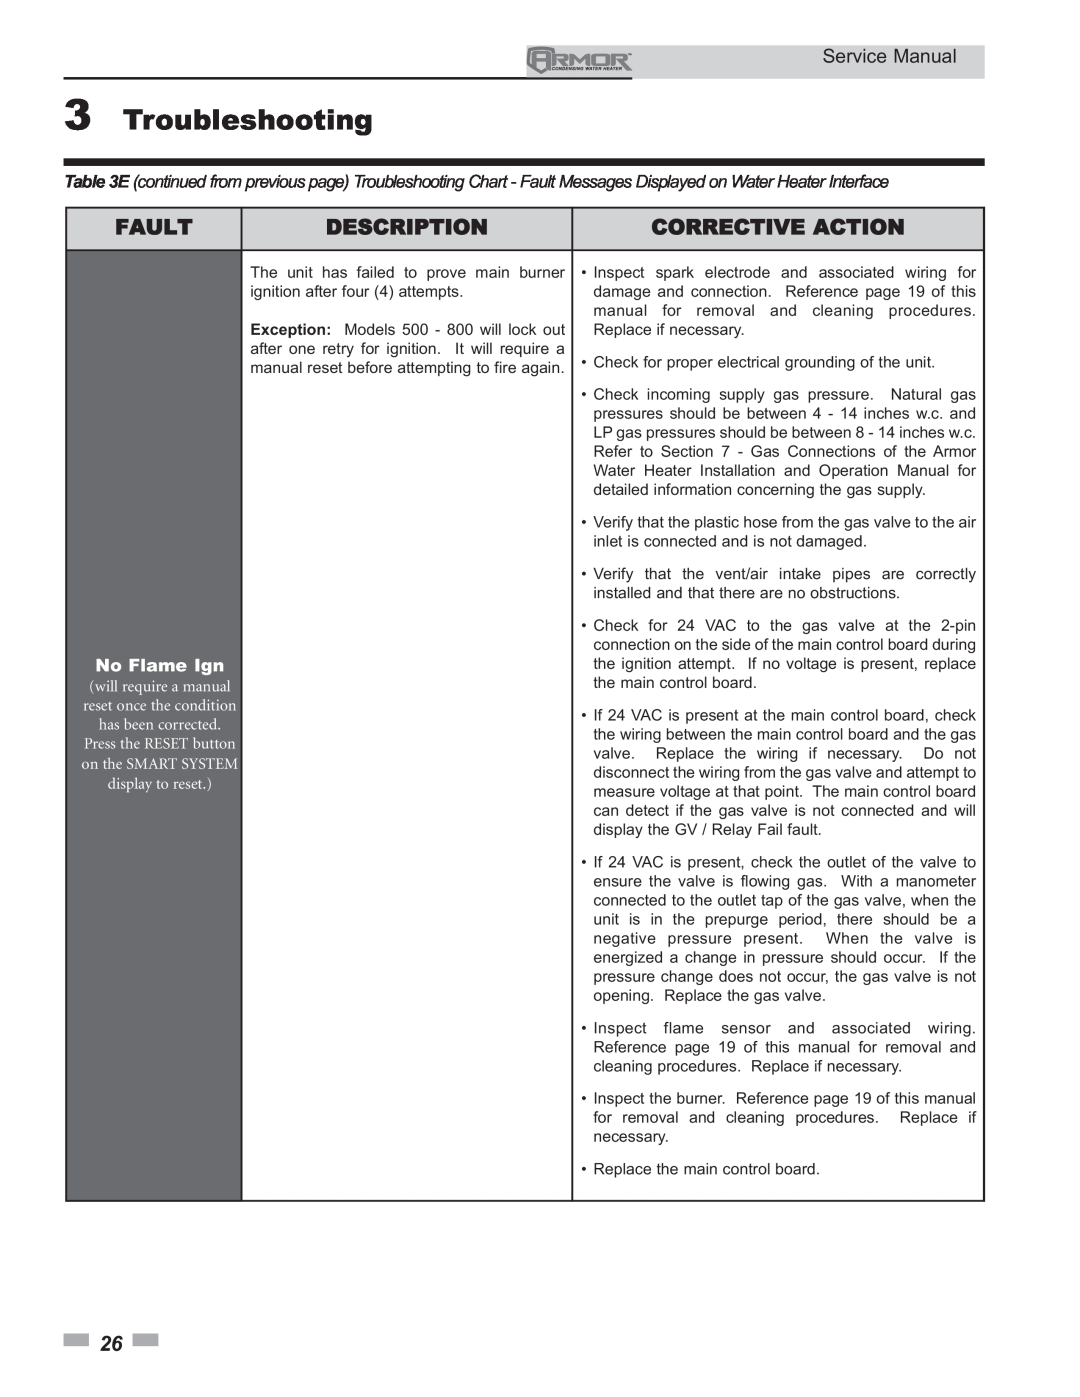 Lochinvar 150 - 800 service manual 3Troubleshooting, Fault, Description, Corrective Action, No Flame Ign 